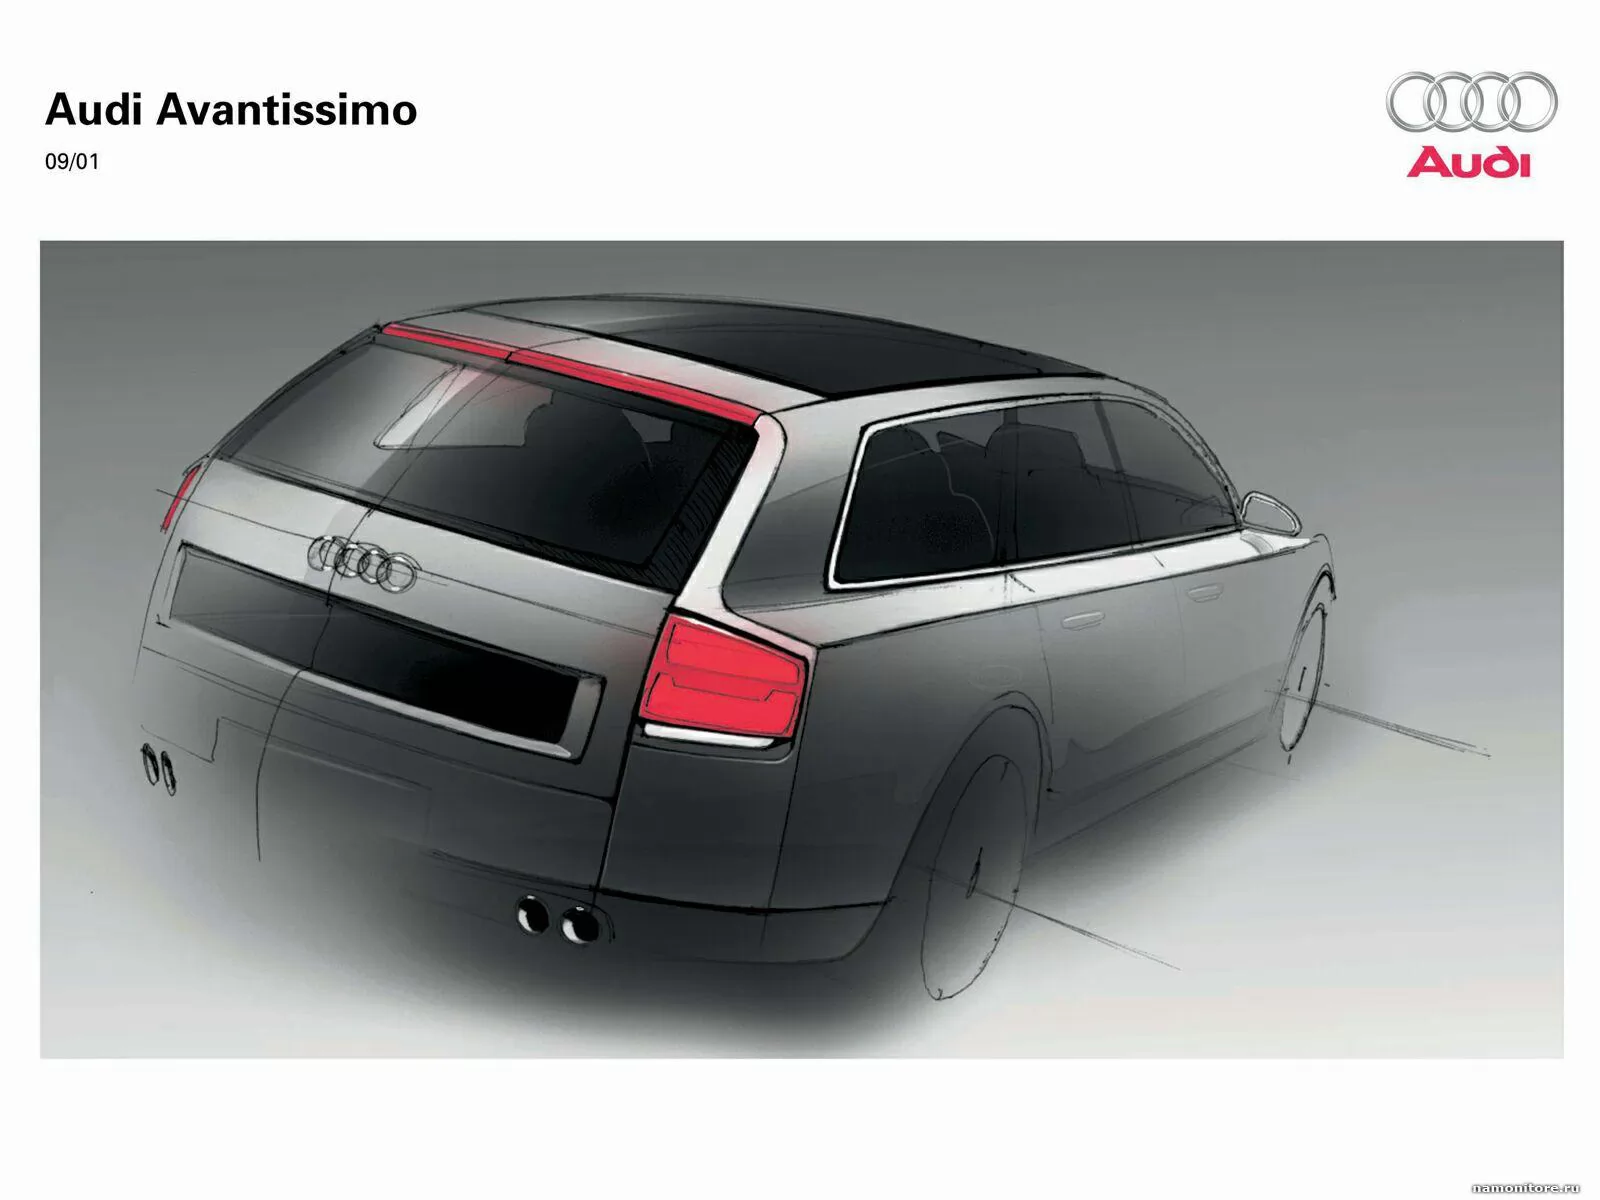 Audi Avantissimo Concept - 2001, Audi, , , , ,  